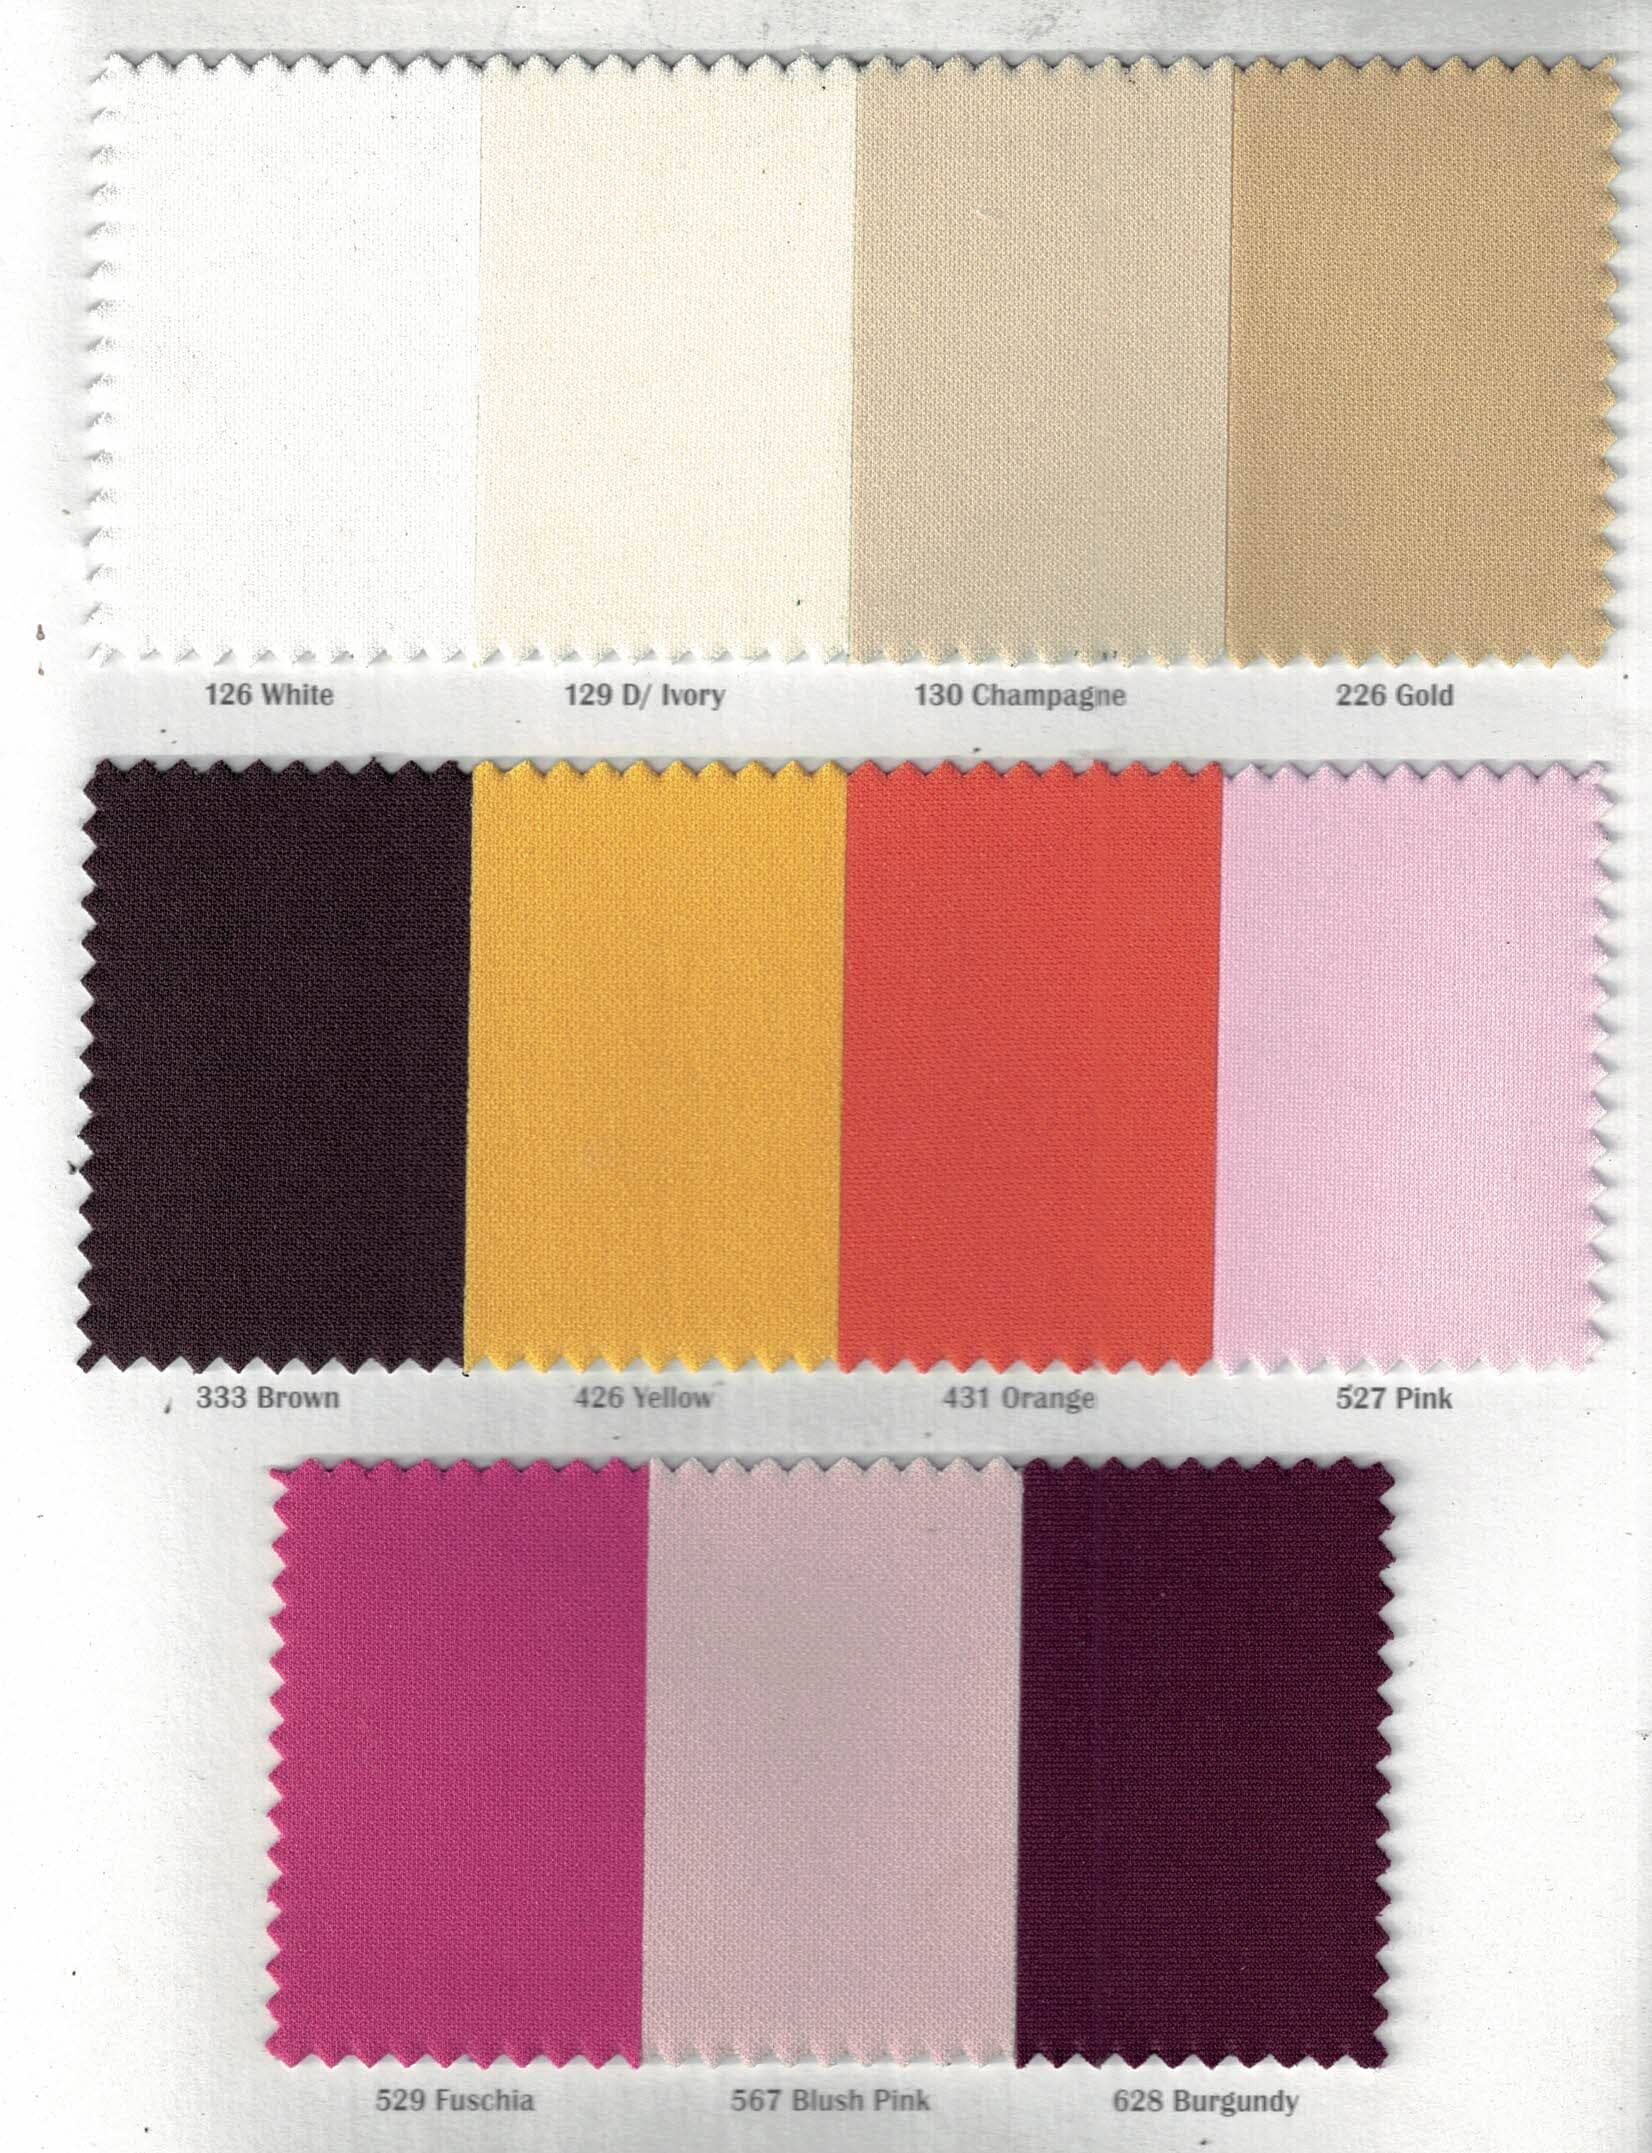 BURGUNDY Neoprene Scuba Knit Fabric Polyester Spandex 58 In. 